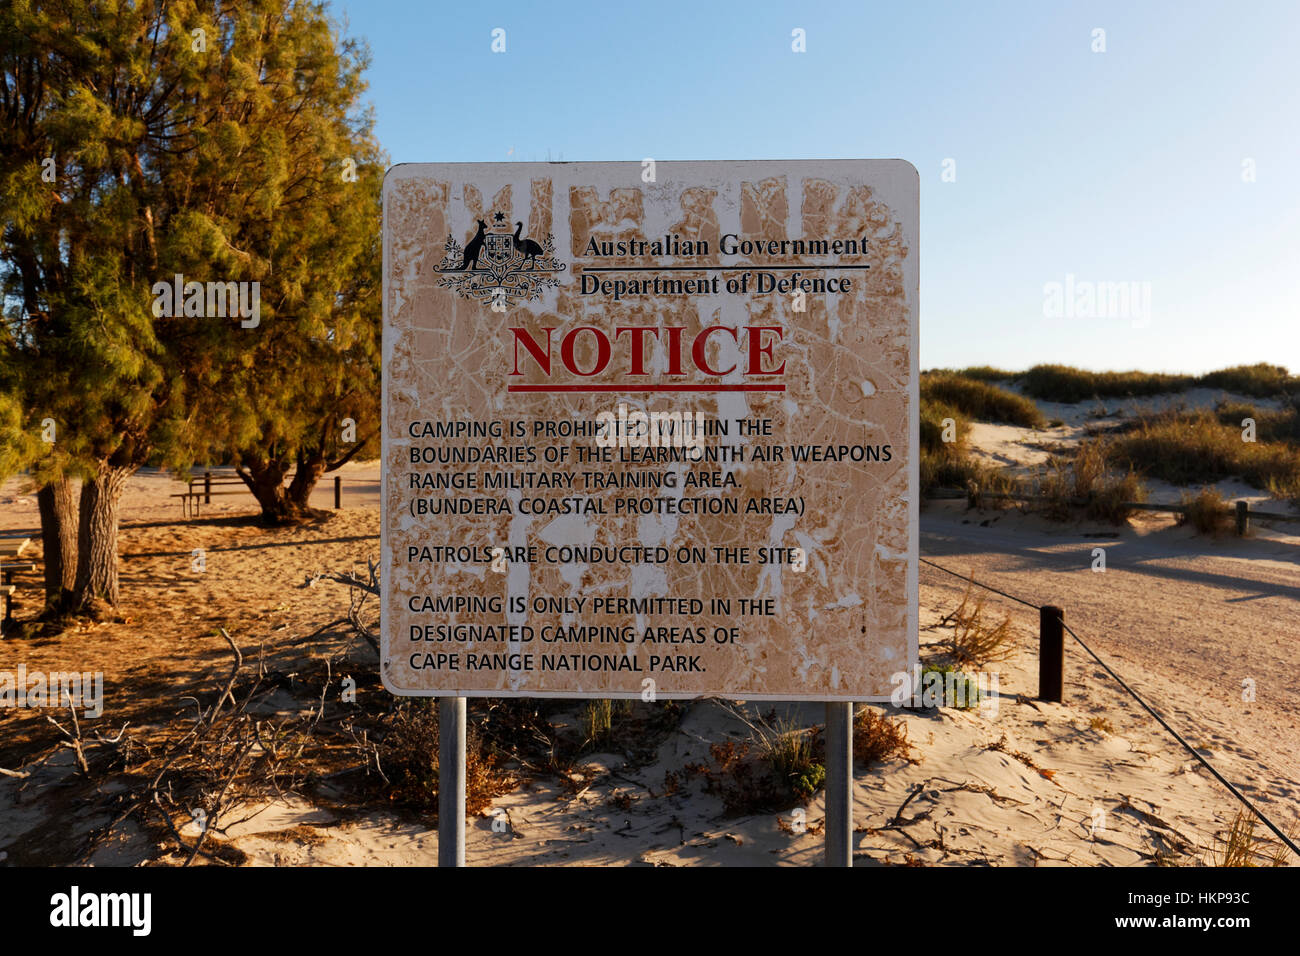 Ministero australiano della difesa avviso, Cape Range National Park, Australia occidentale. Foto Stock